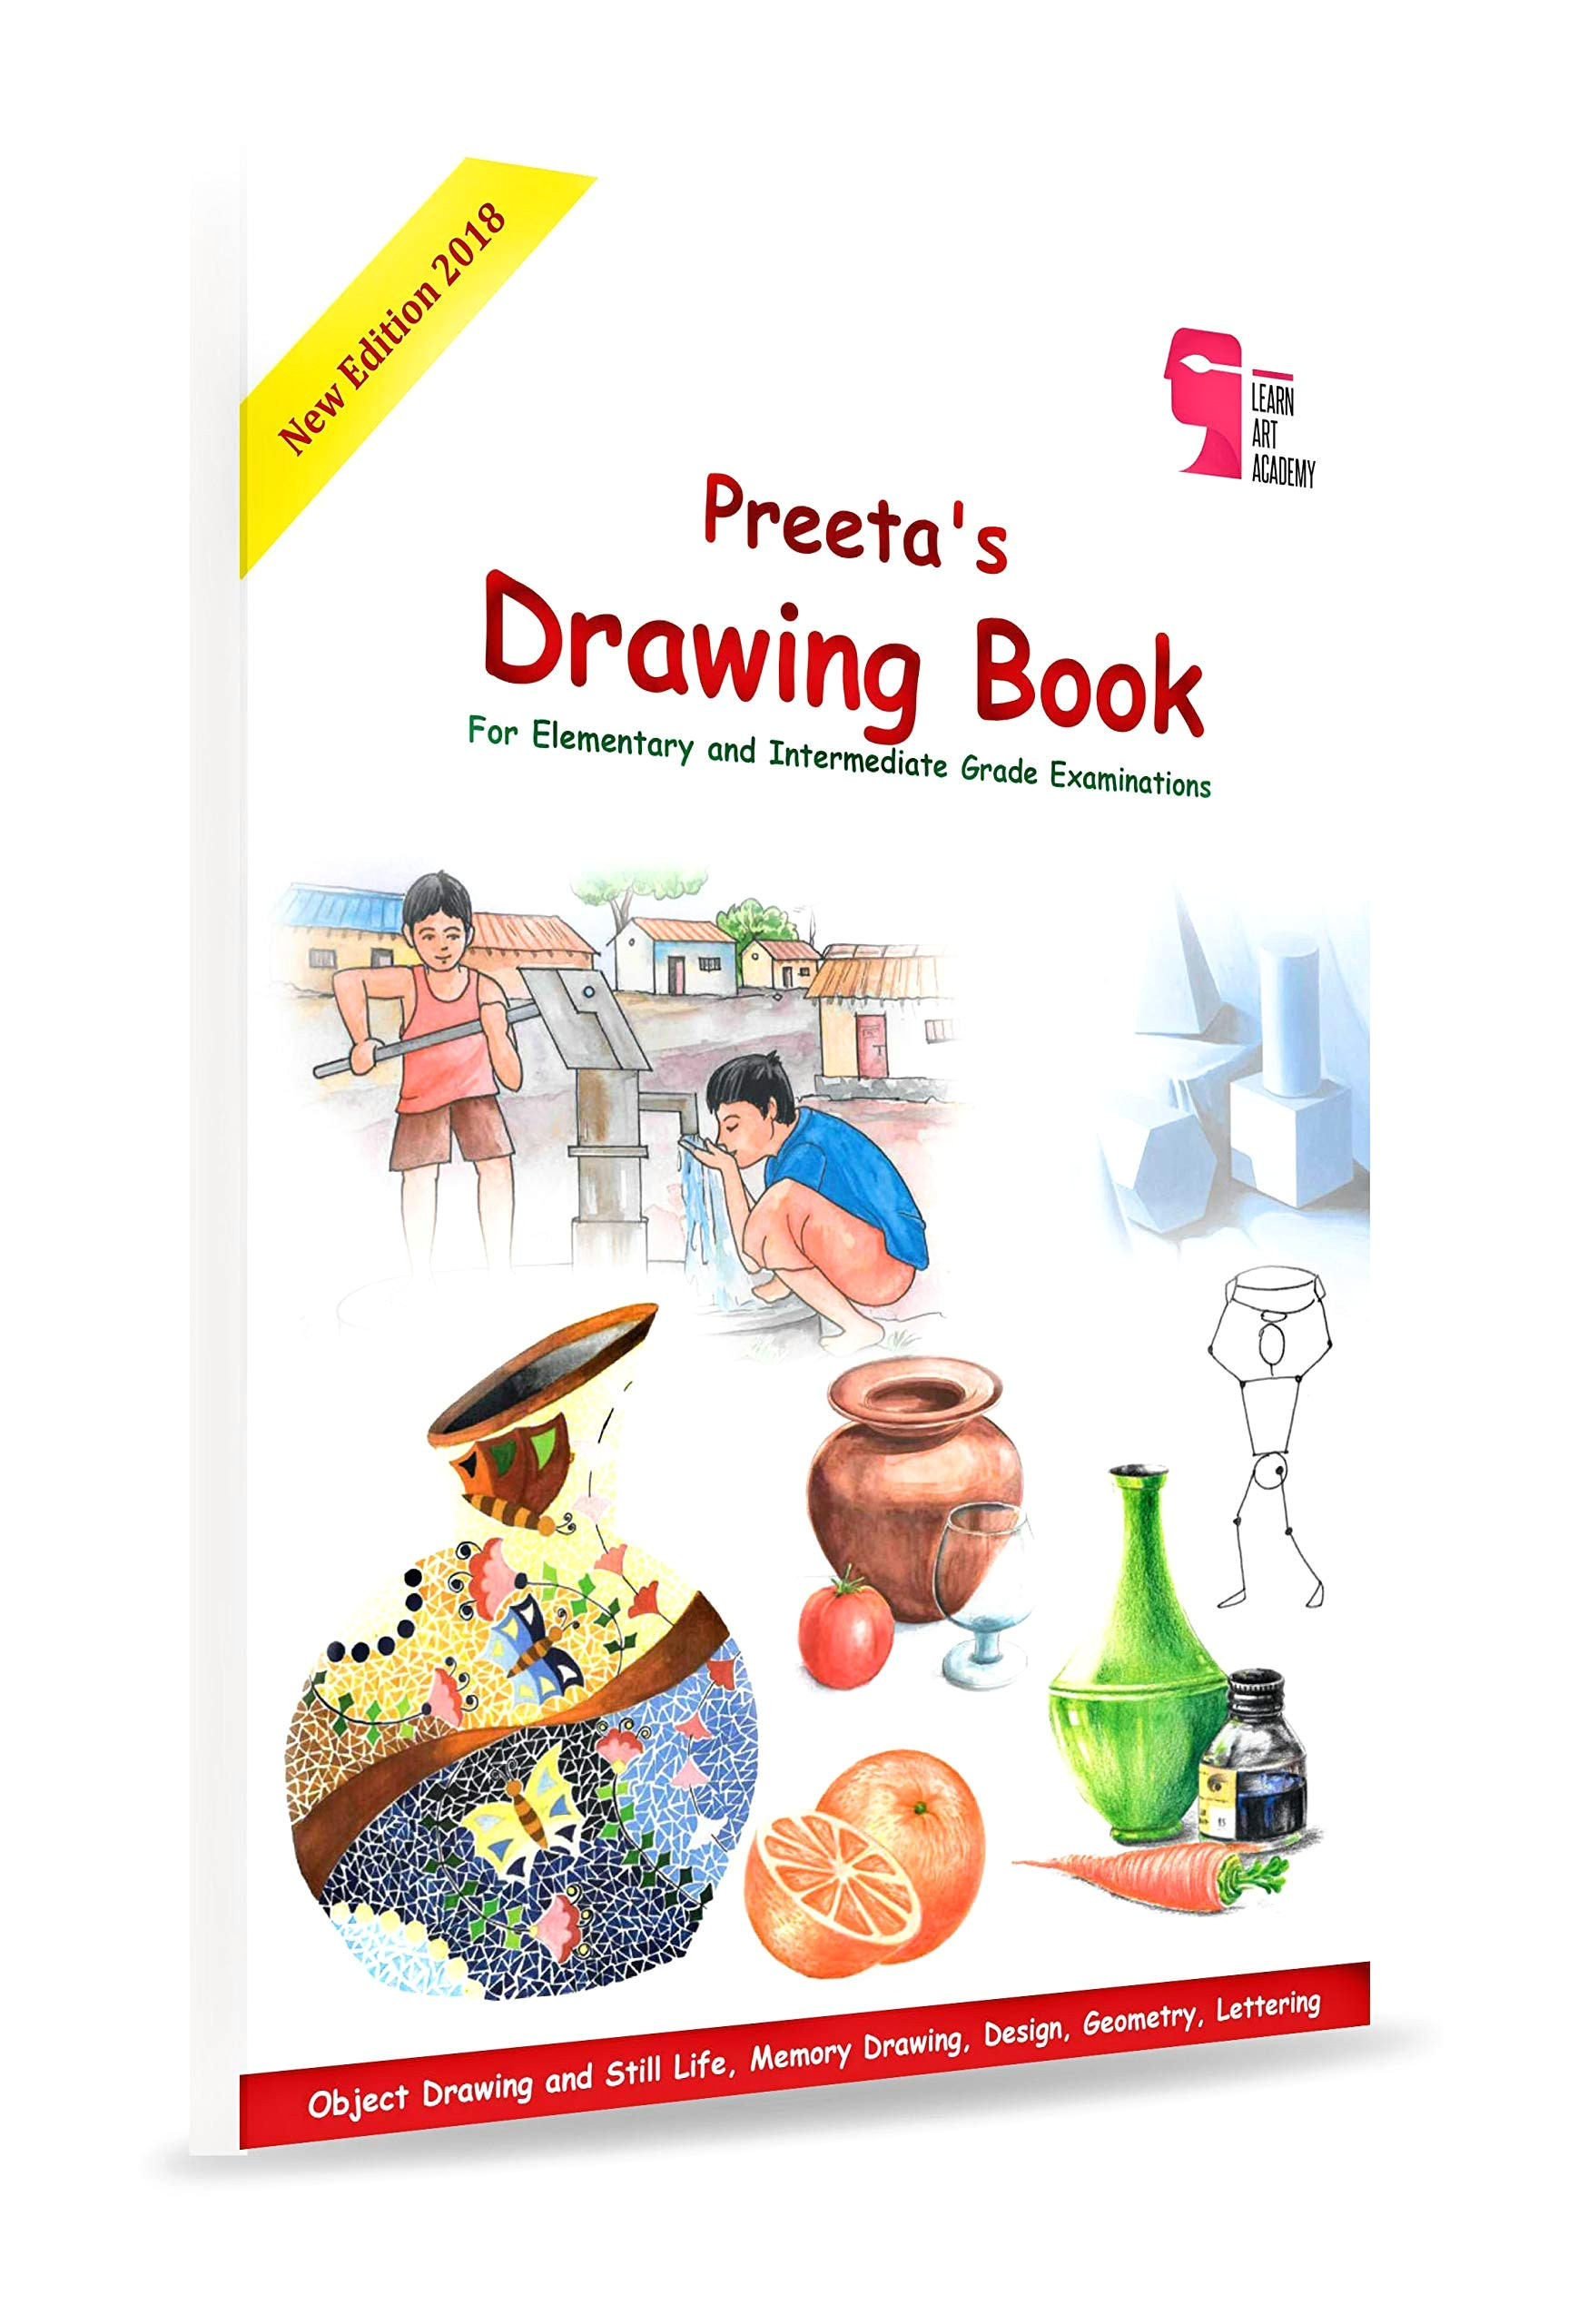 Class 6 Drawing Book Buy Preeta S Drawing Book for Elementary and Intermediate Grade